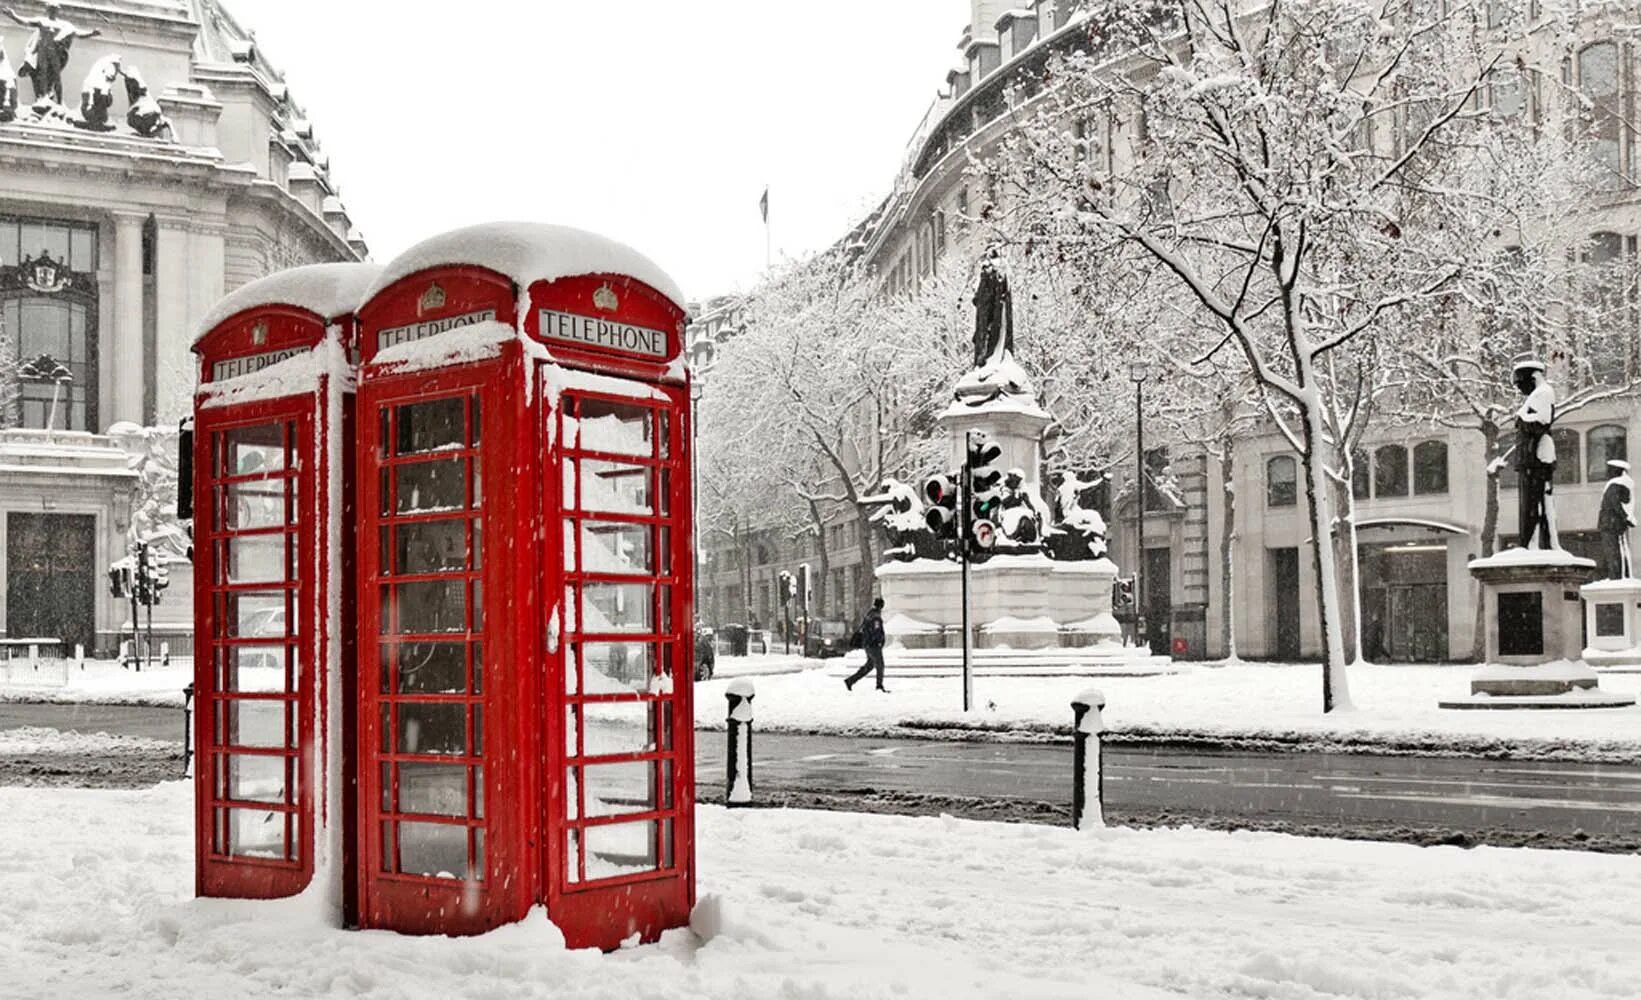 Лондон зимой. Зимний Лондон Вайб. Столица Англии – Лондон зимой. Снег в Лондоне. Пермь лондон